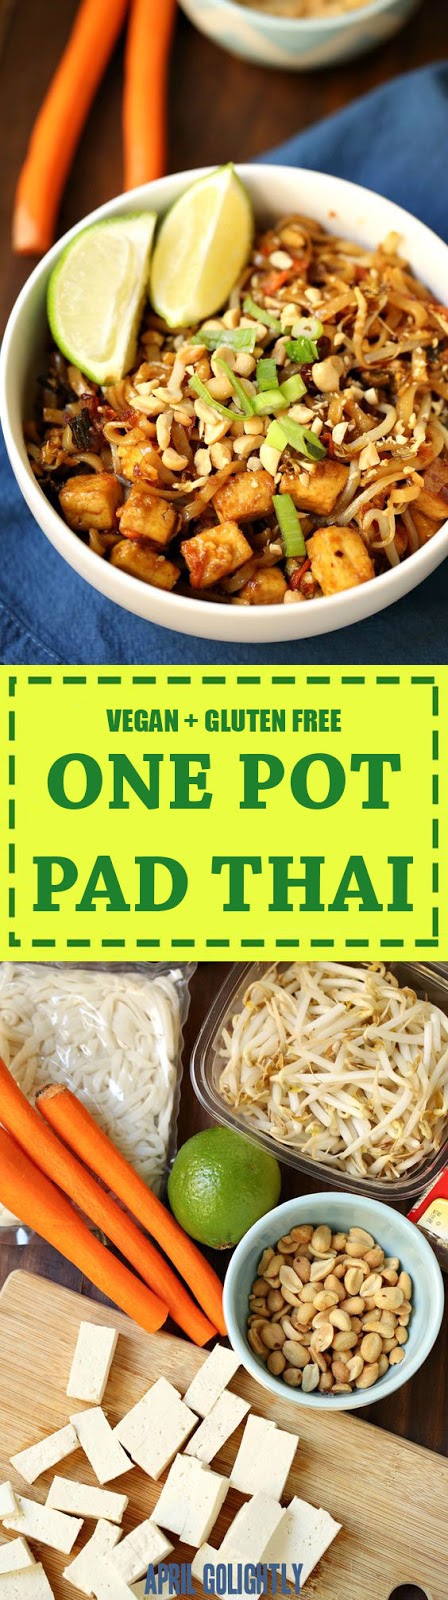 Vegan + Gluten Free One Pot Pad Thai